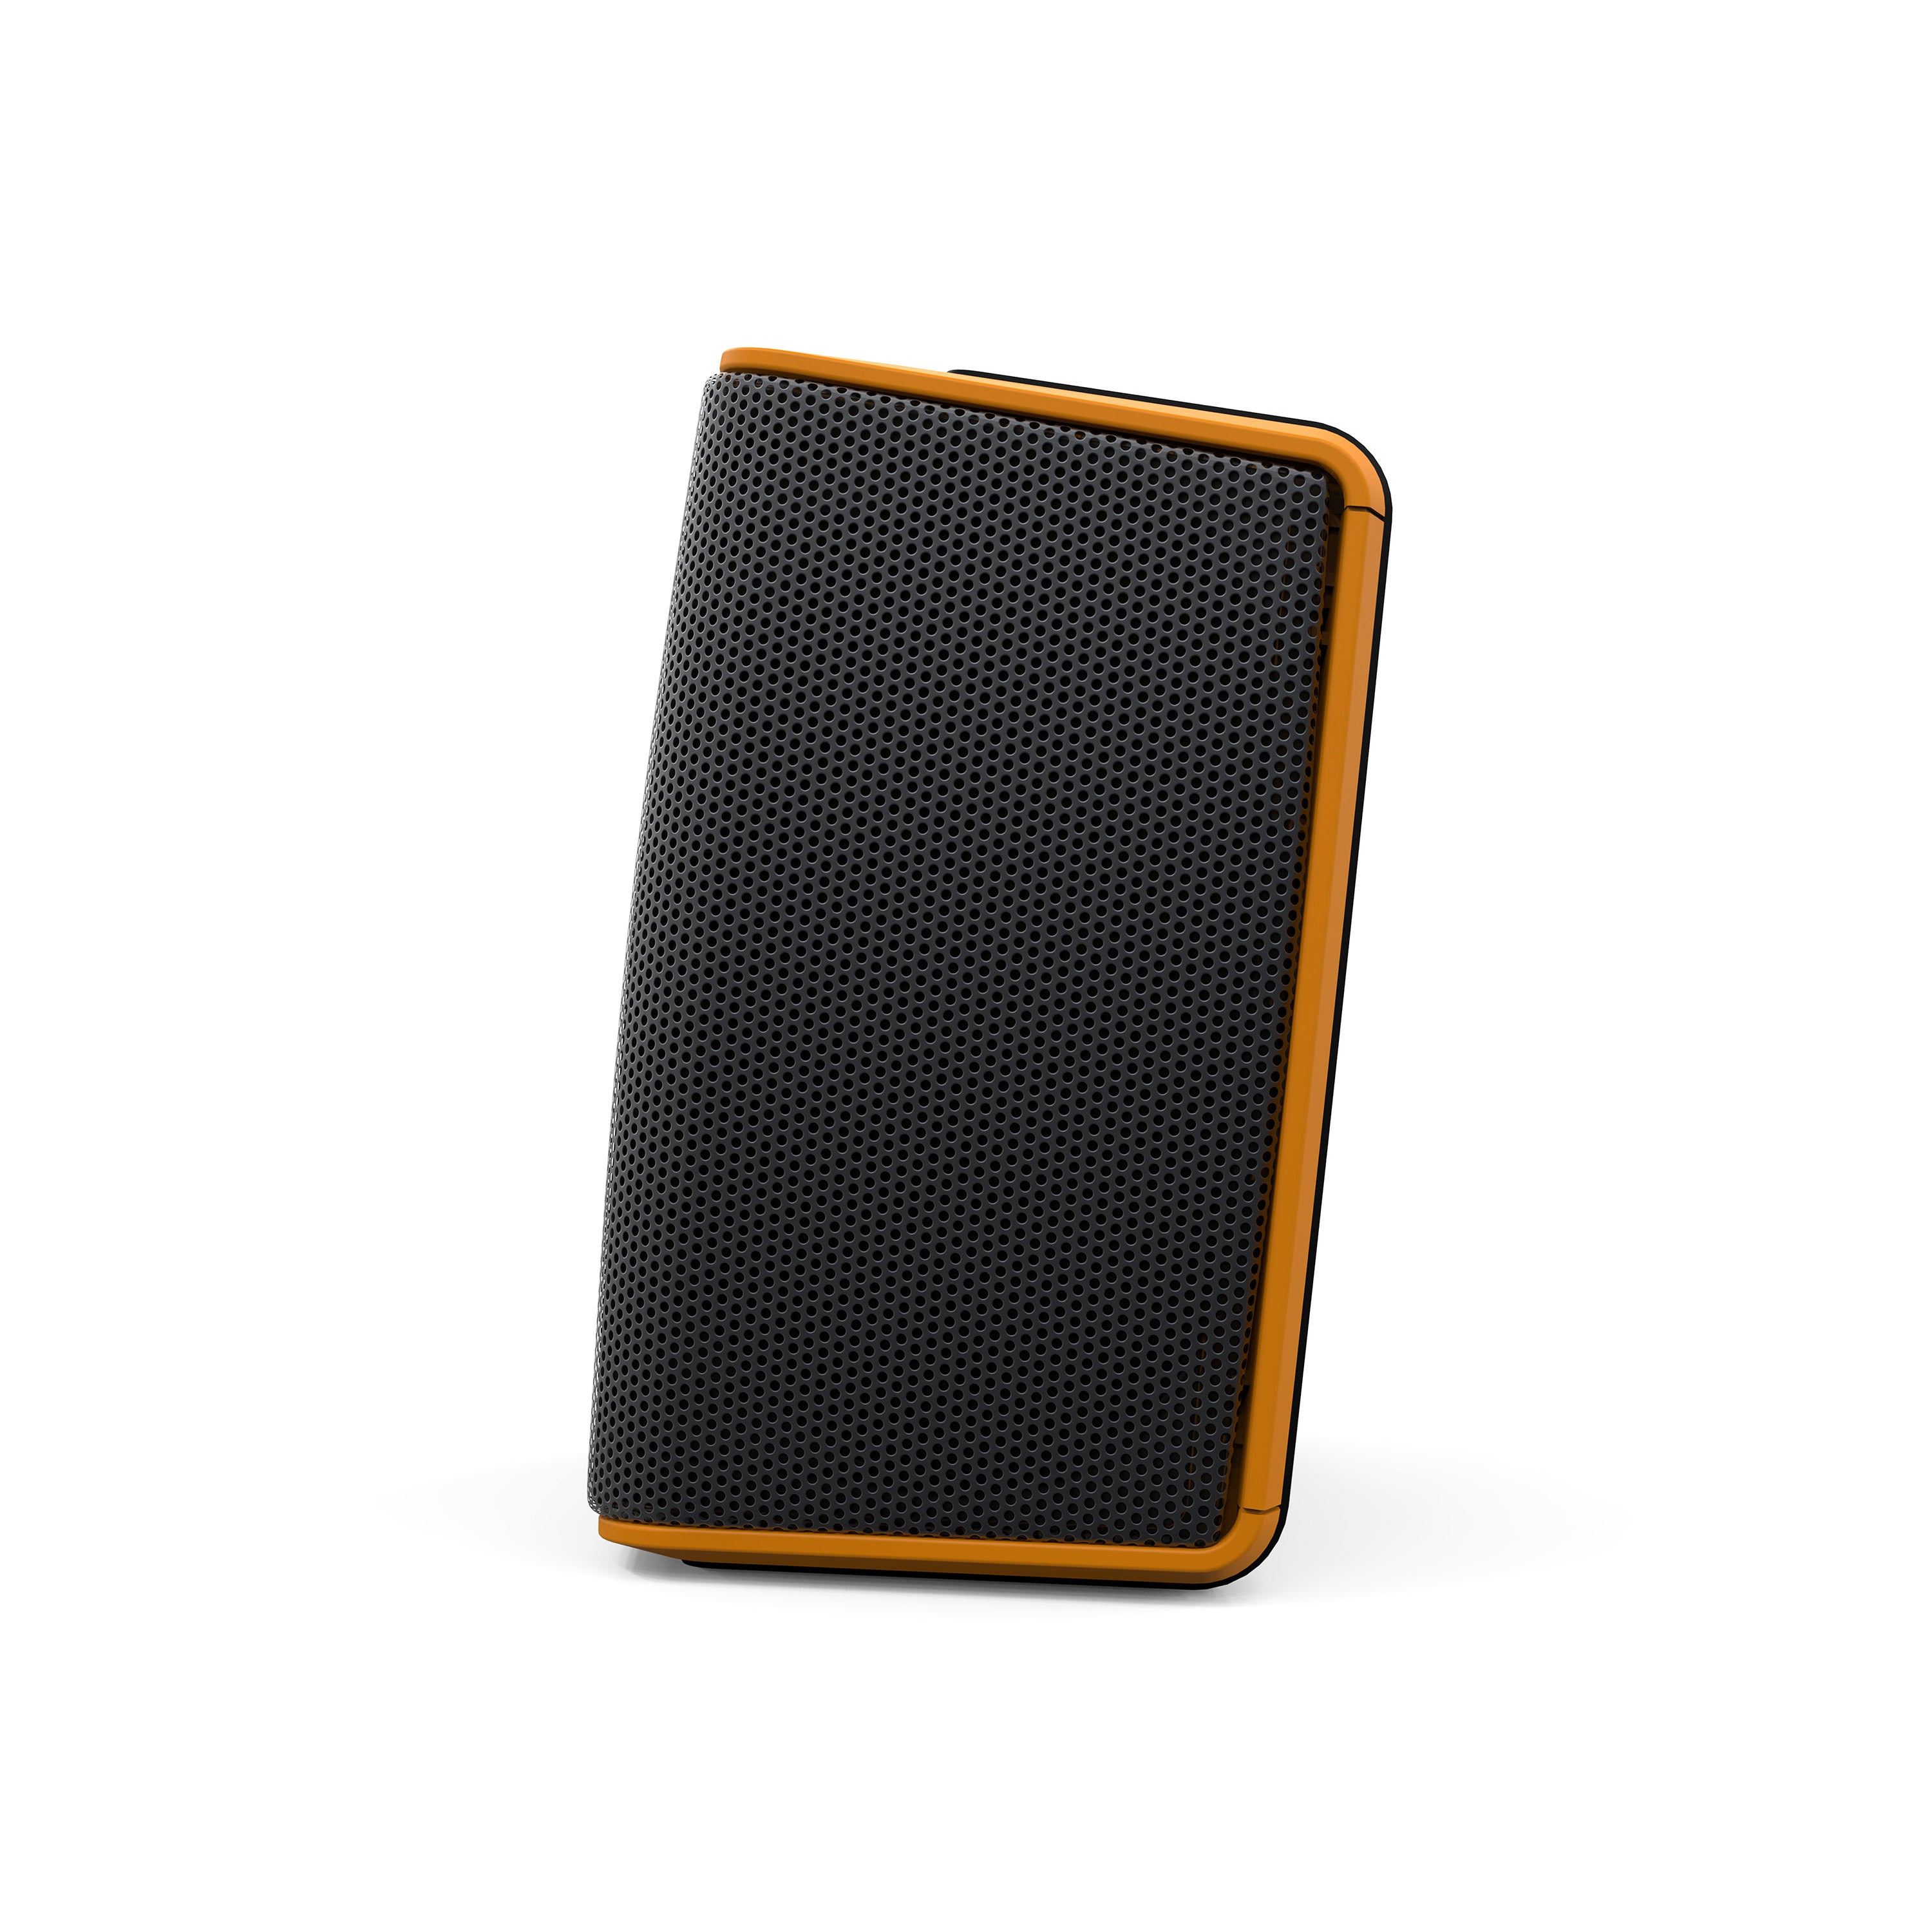 Groove Portable Bluetooth Speaker - McLaren Edition